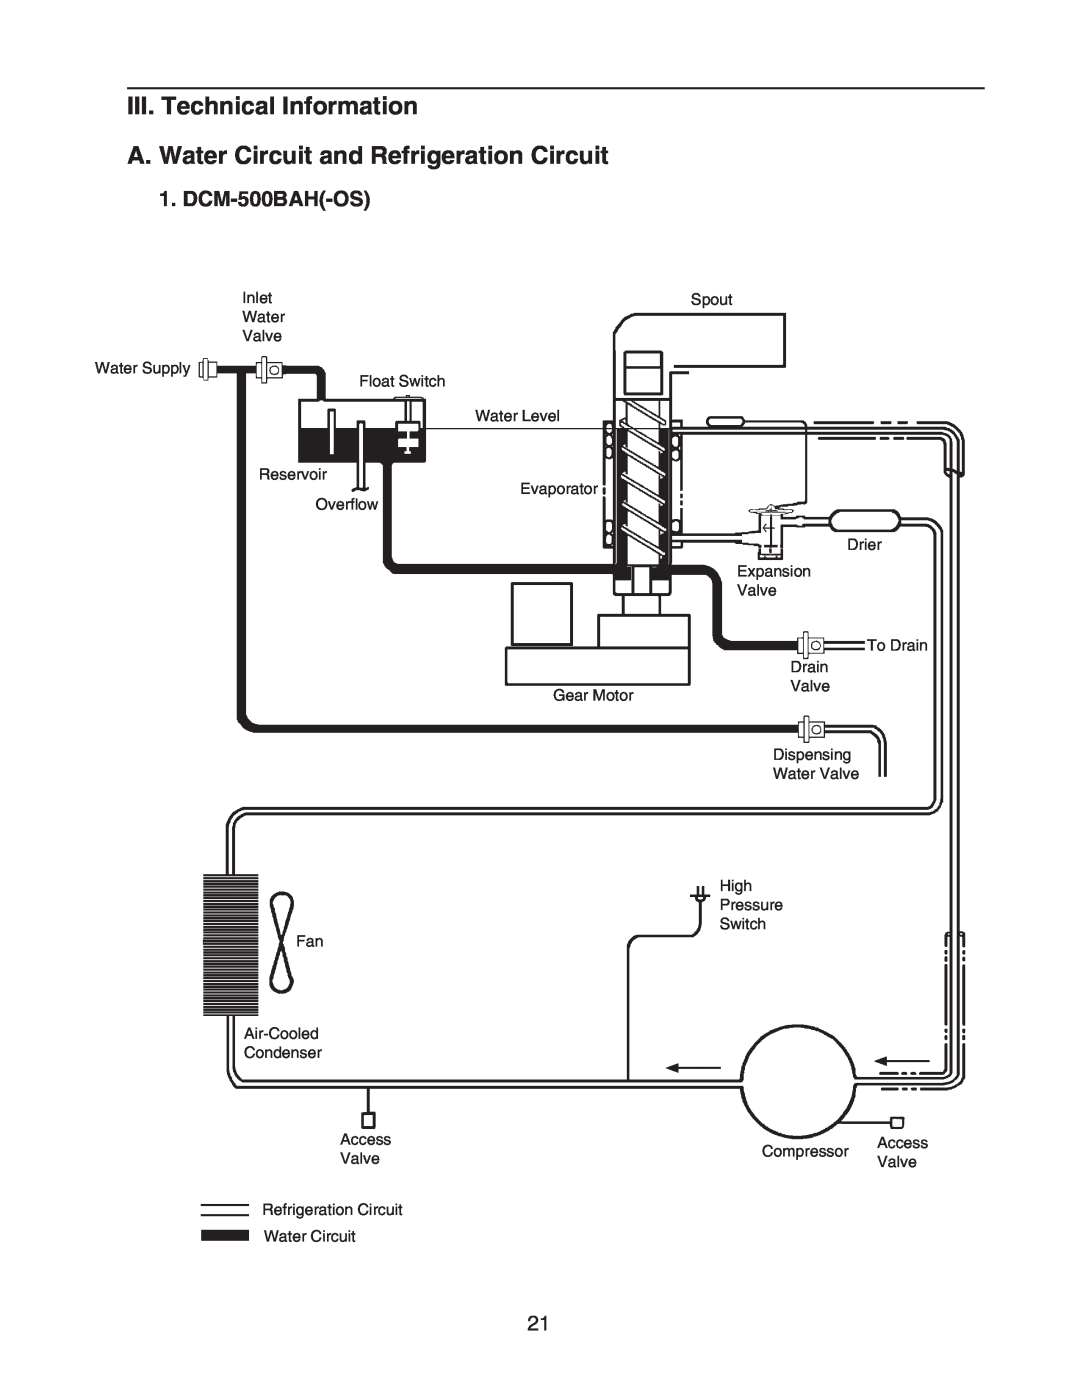 Hoshizaki DCM-500BWH-OS service manual III. Technical Information A. Water Circuit and Refrigeration Circuit, DCM-500BAH-OS 